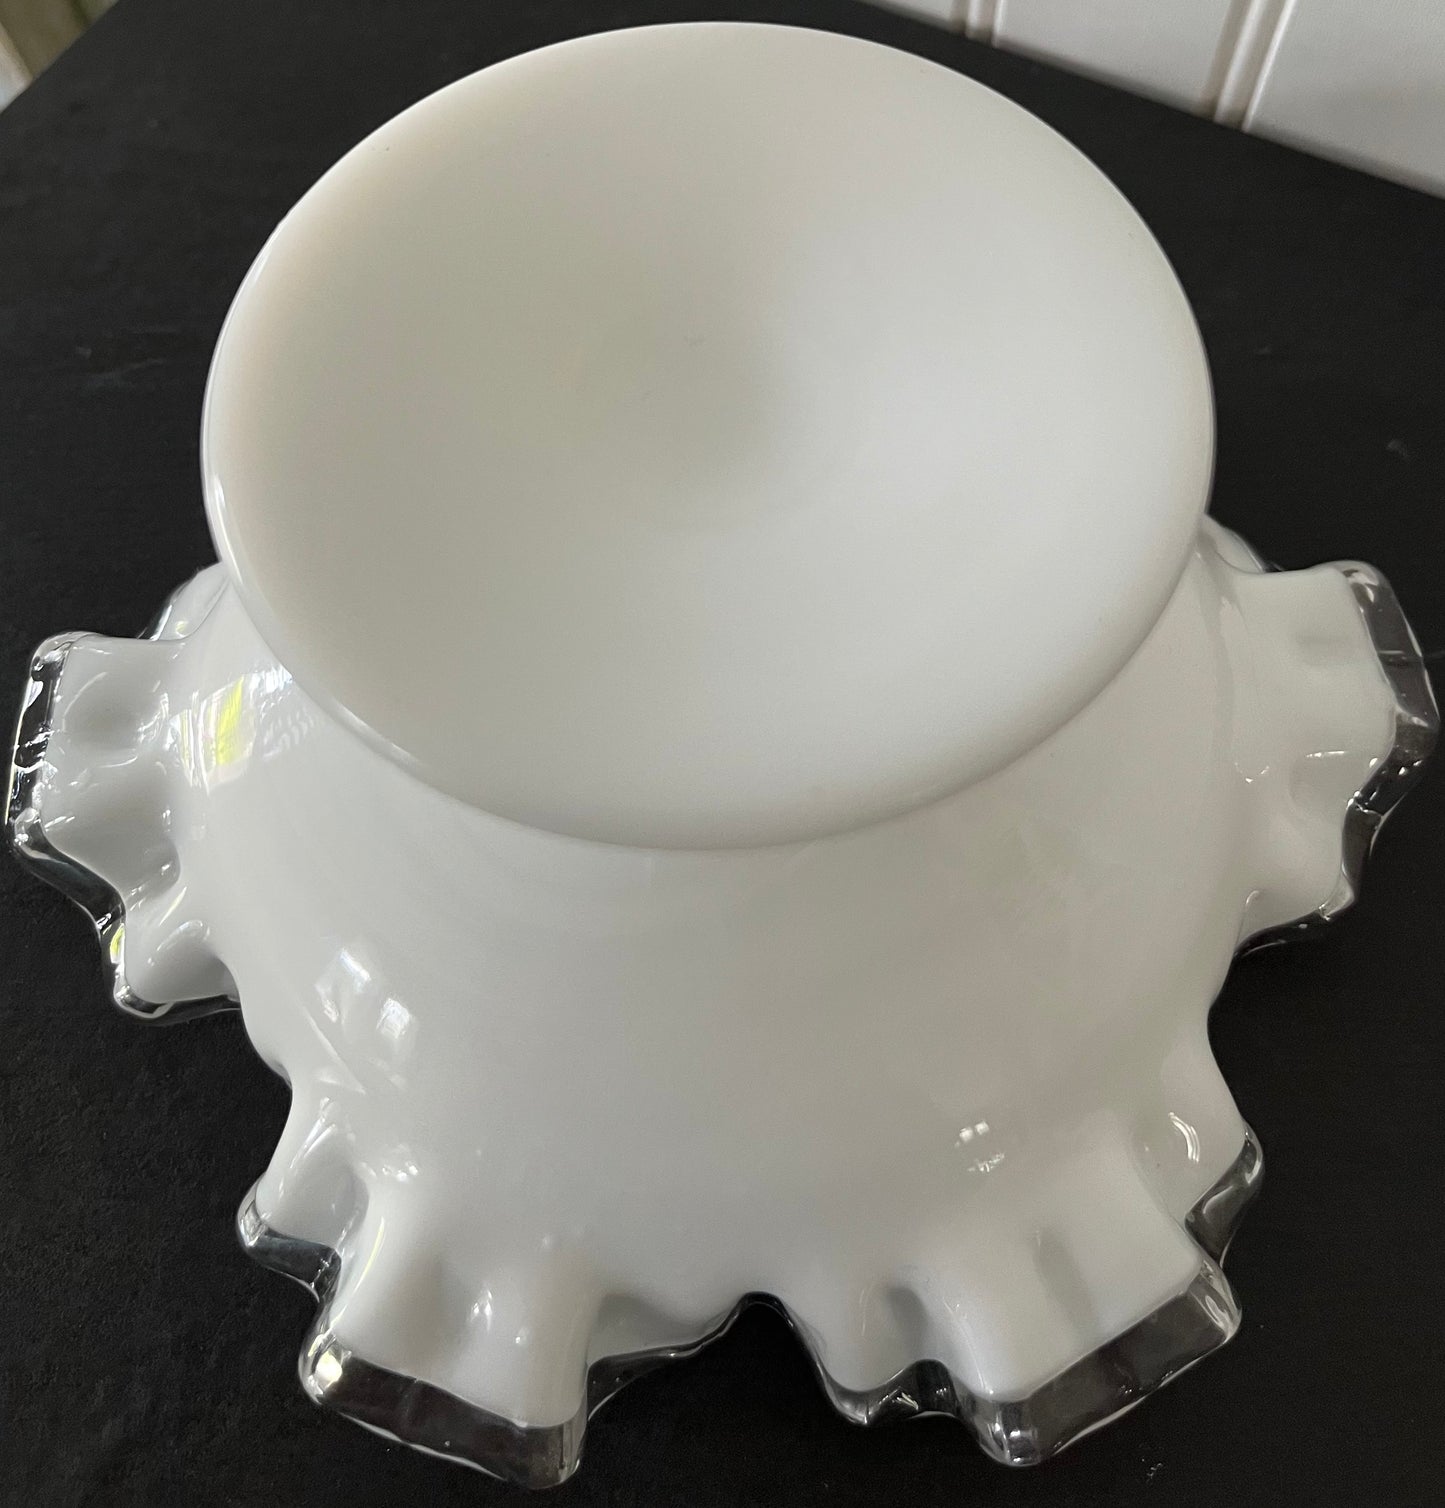 Vintage Fenton Silvercrest Medium Ruffled Edge Pedestal Bowl - 1950s White Milk Glass